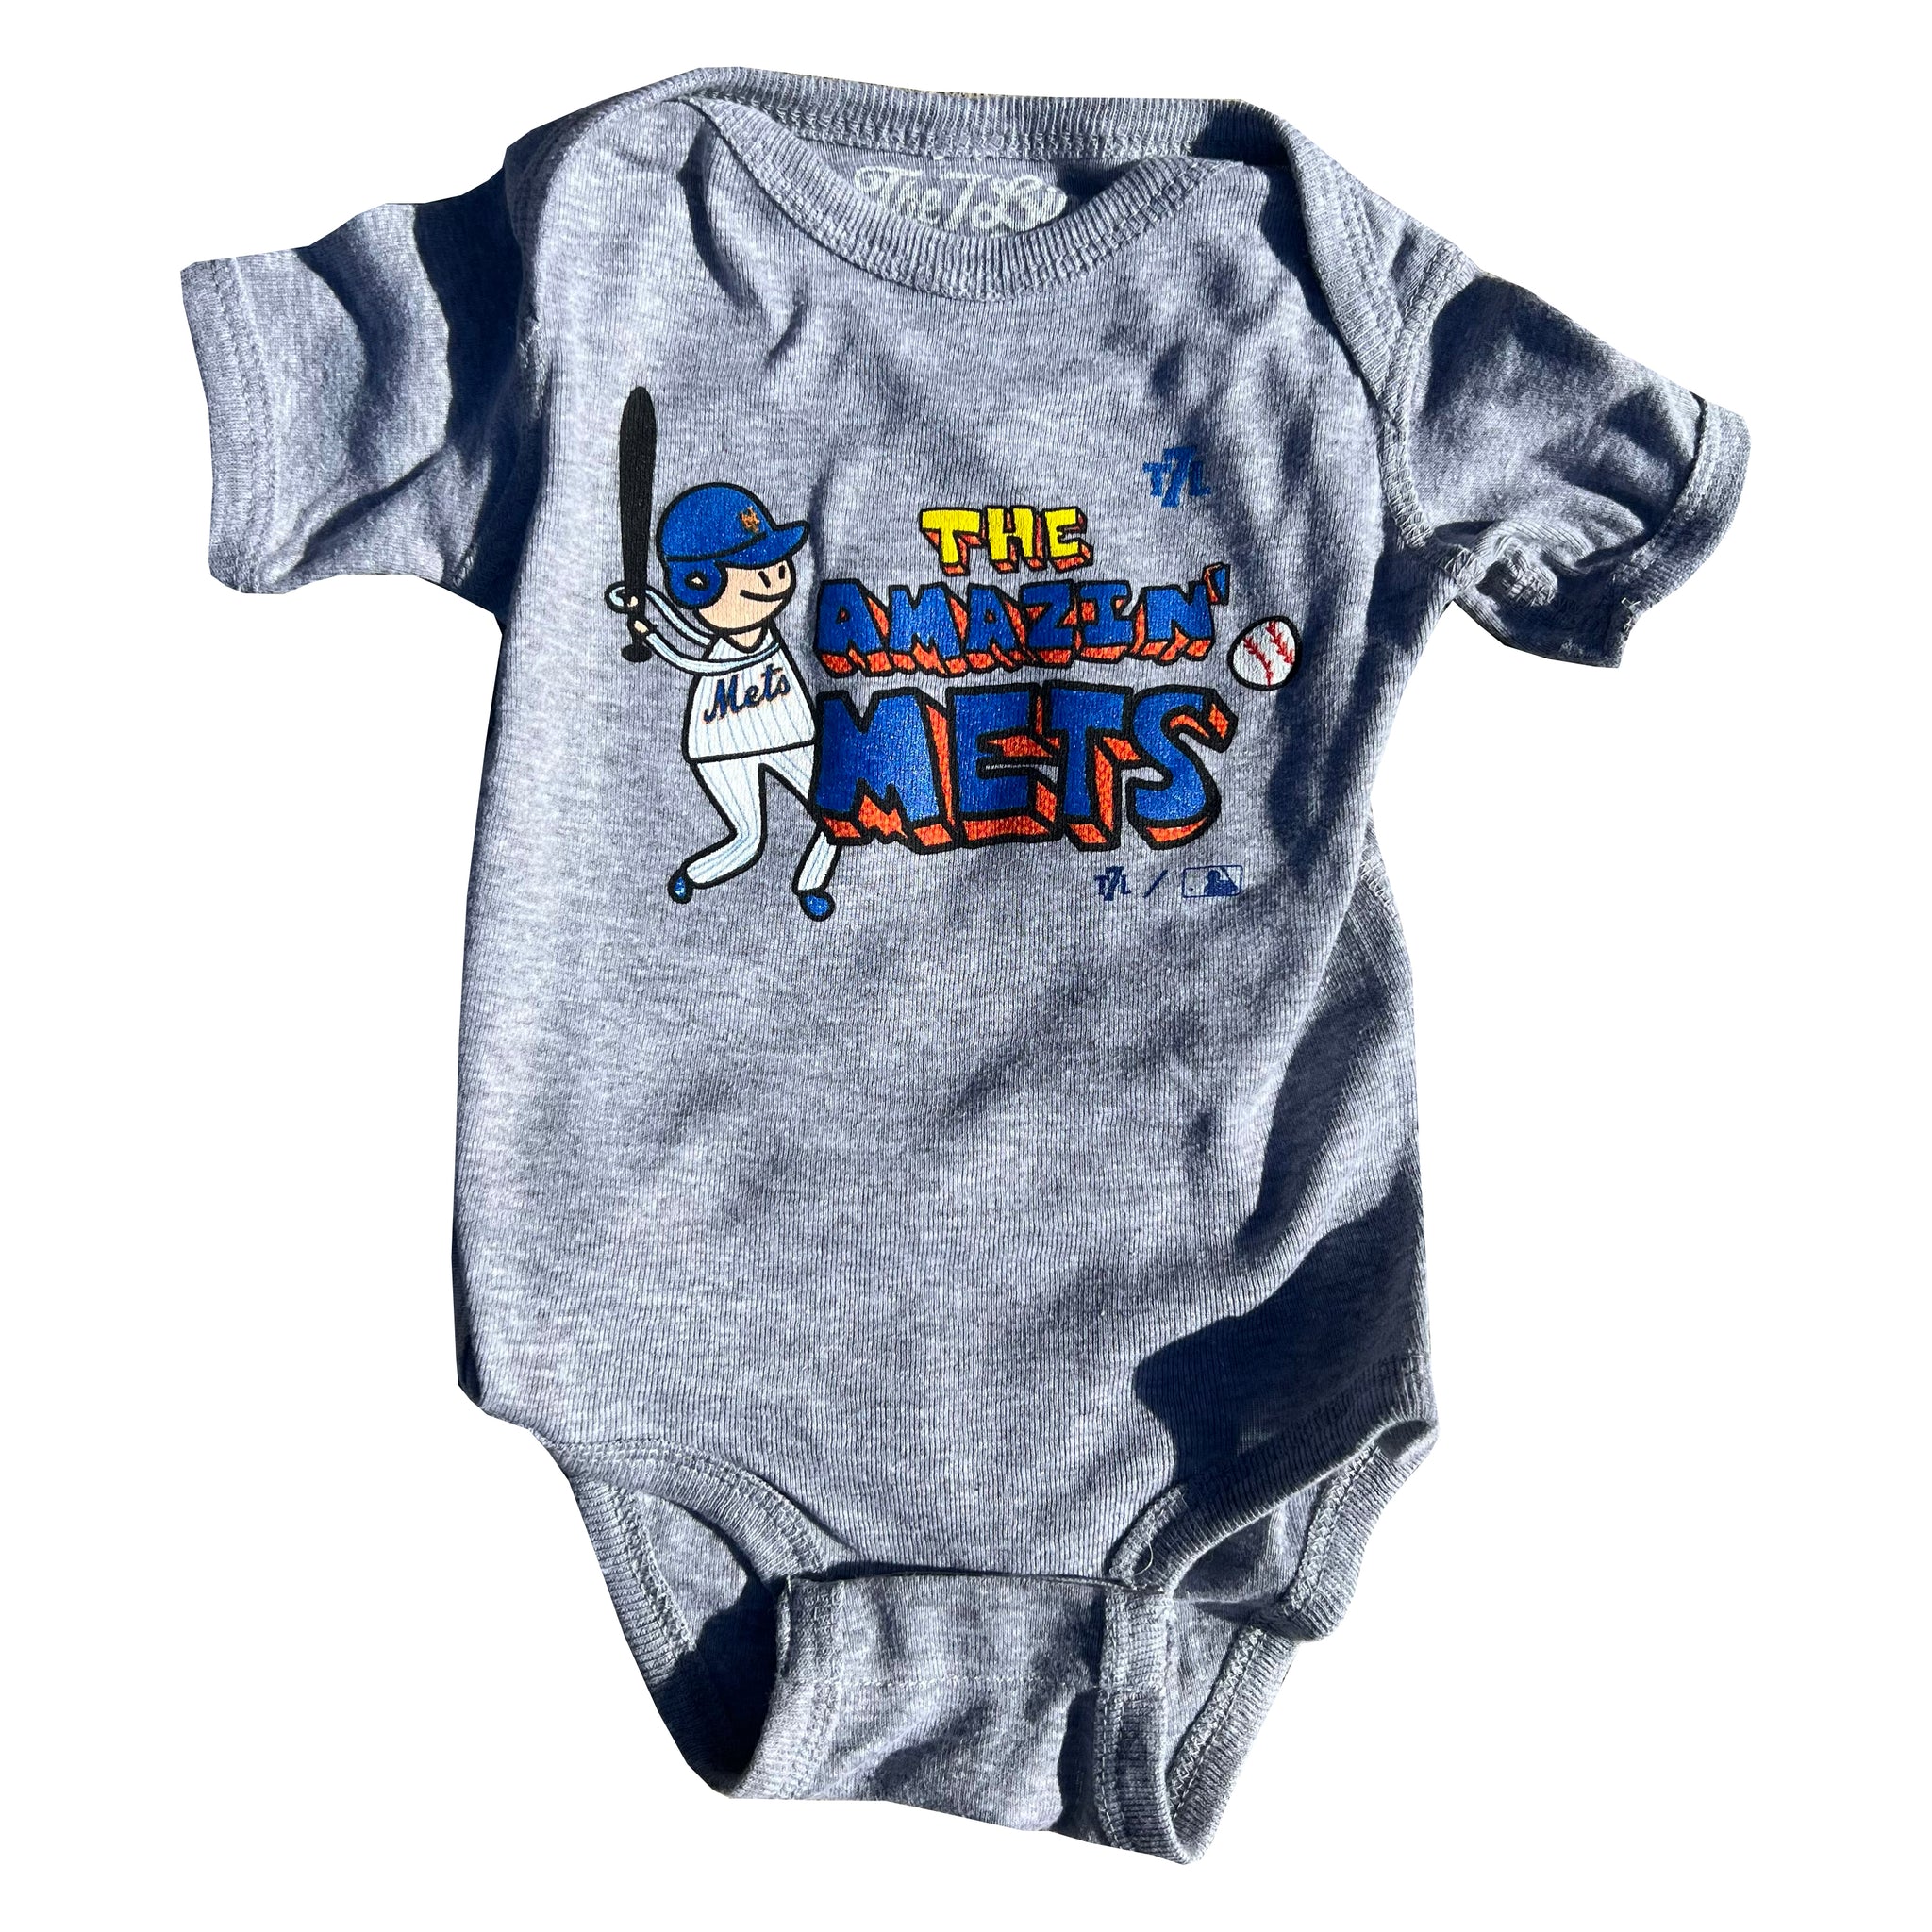 New York Mets Baby Apparel, Mets Infant Jerseys, Toddler Apparel